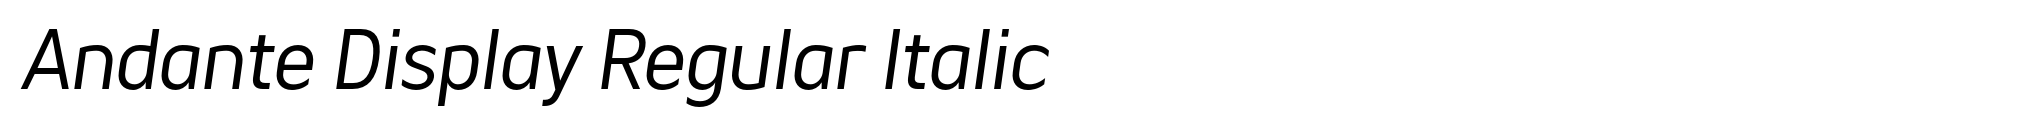 Andante Display Regular Italic image